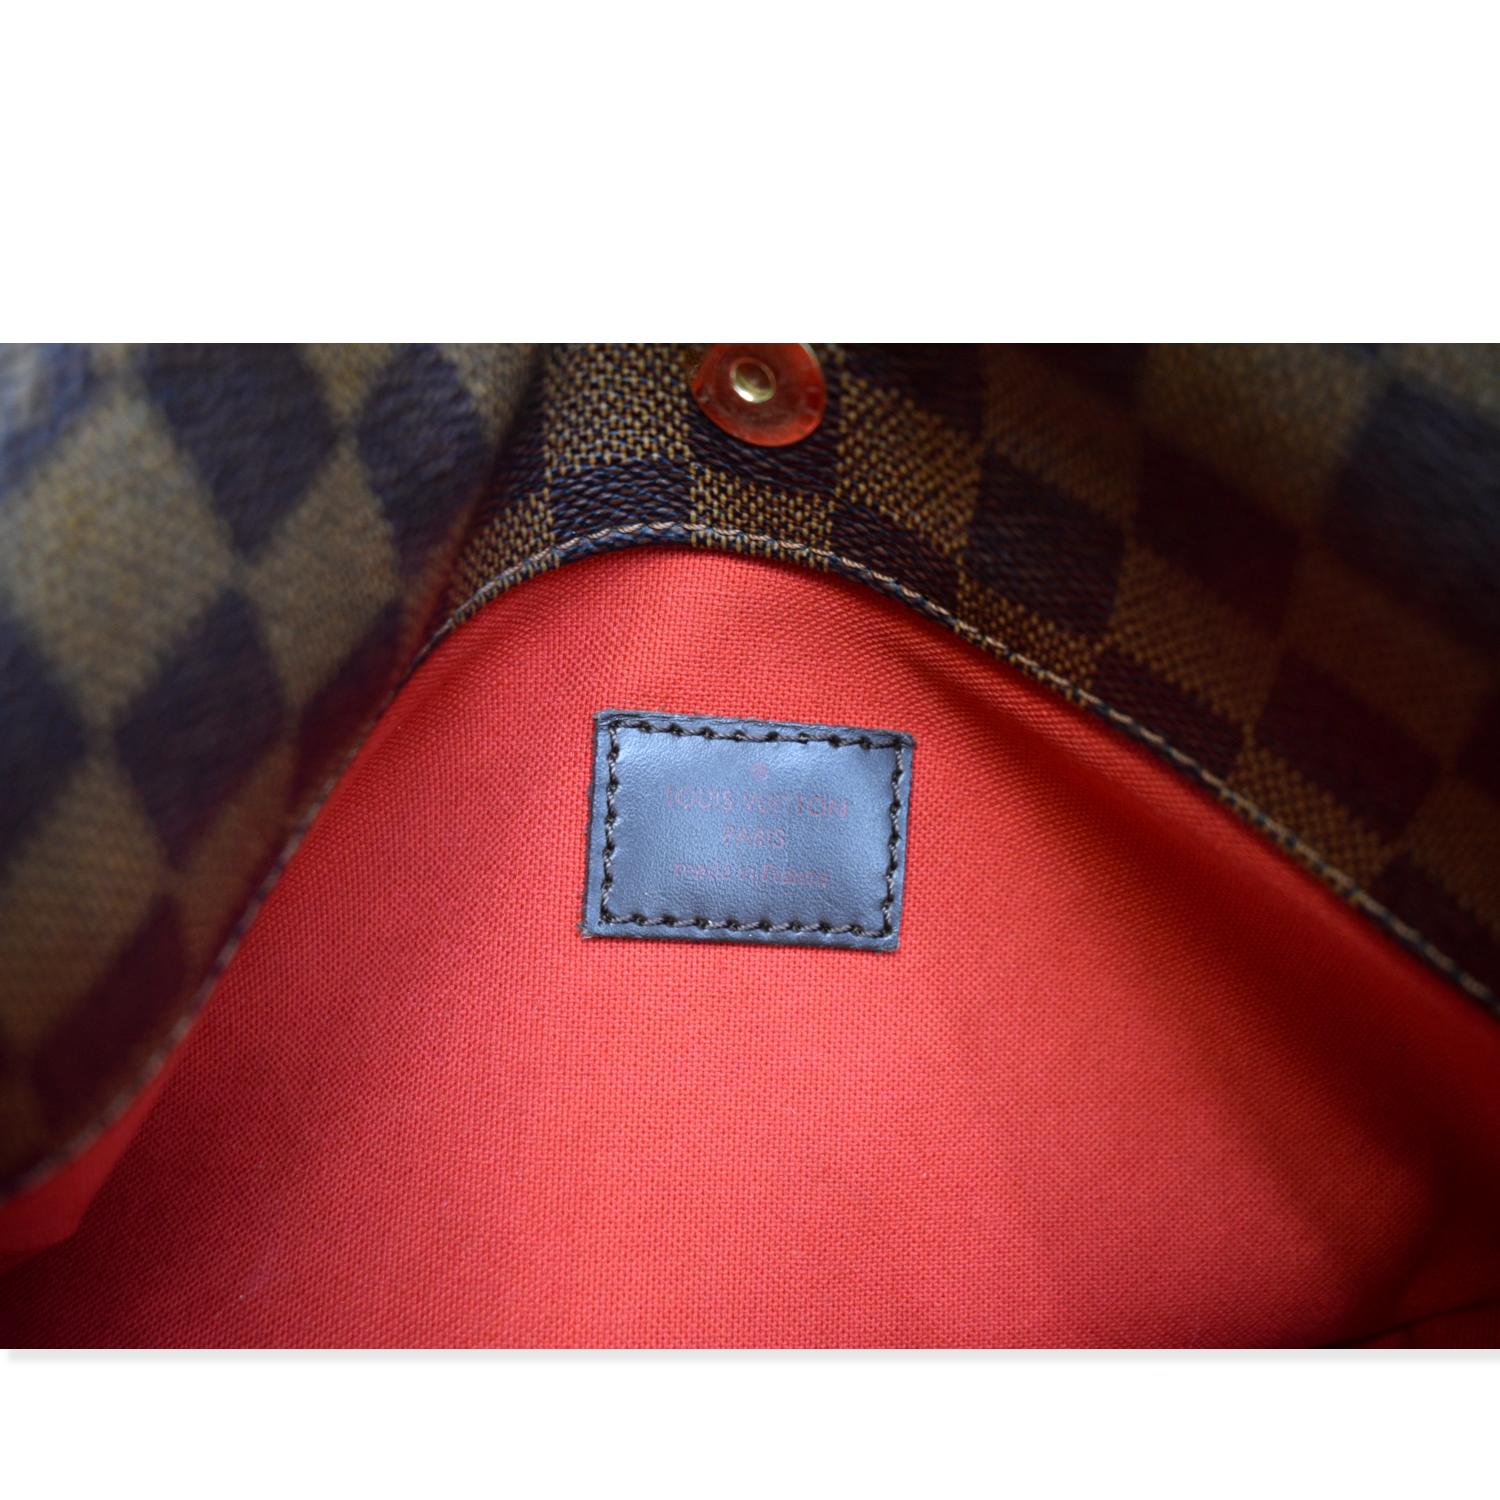 Louis Vuitton Damier Ebene Bloomsbury PM Crossbody Bag 88lk817s